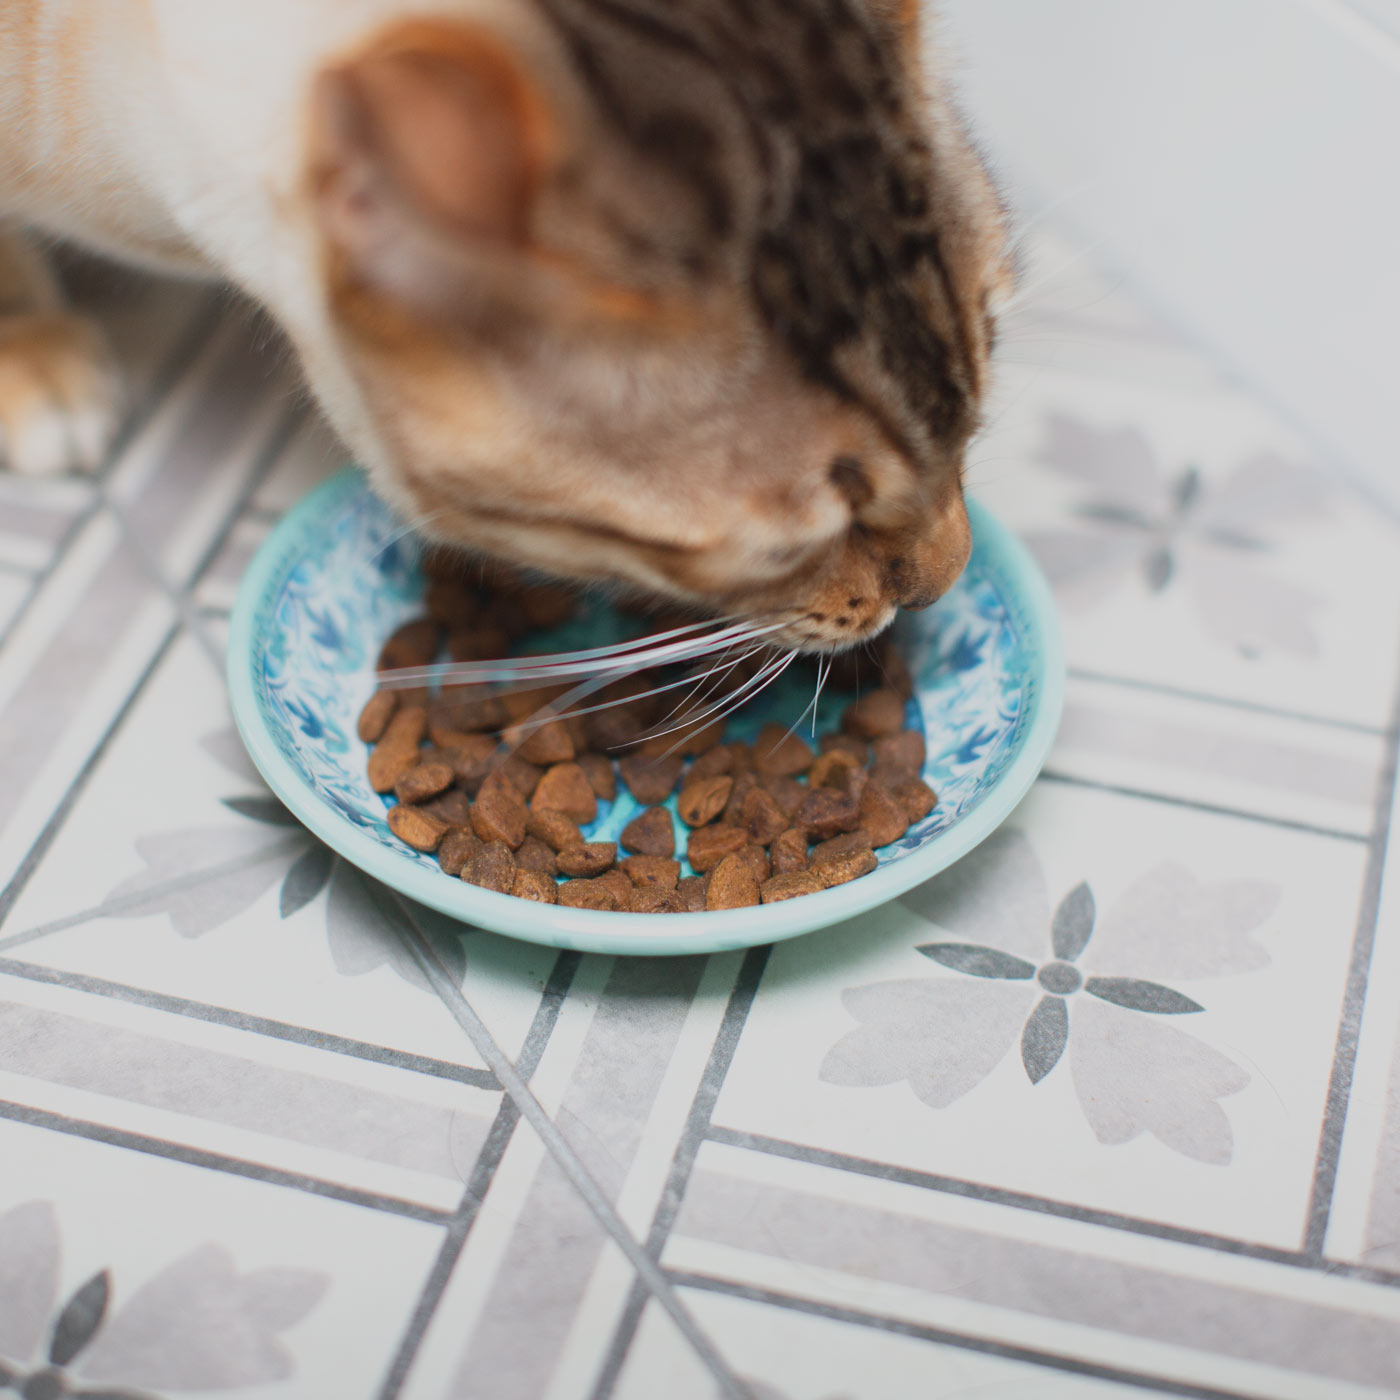 Tarhong gibraltar bowl with cat eating